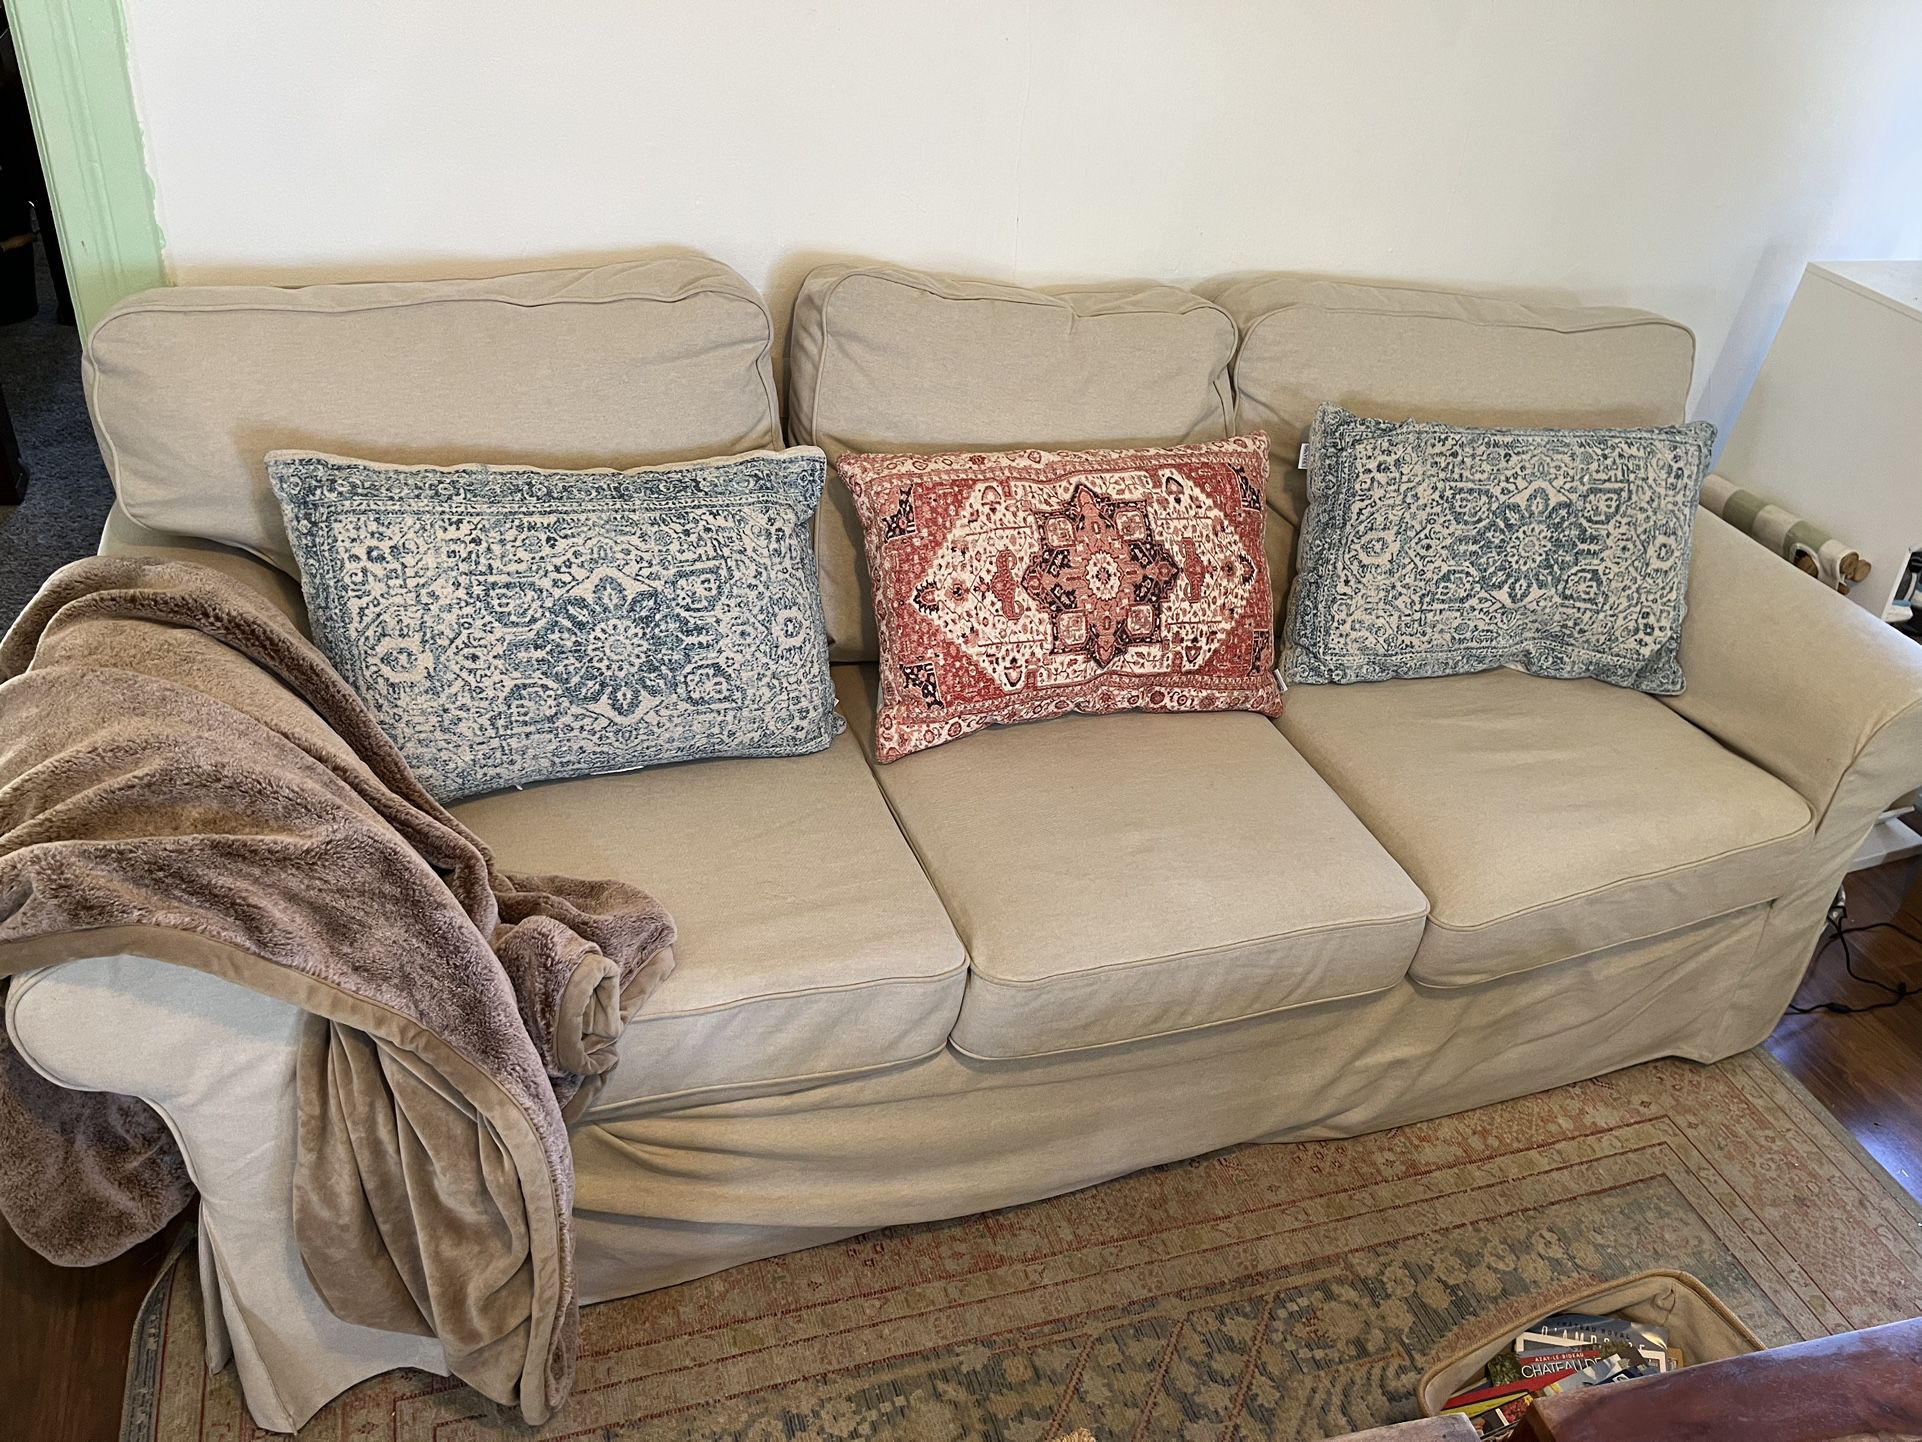 Coördineren trompet Arrangement Ikea Ektorp Couch In Excellent Condition With 2 Slipcover Sets for Sale in  Laguna Beach, CA - OfferUp